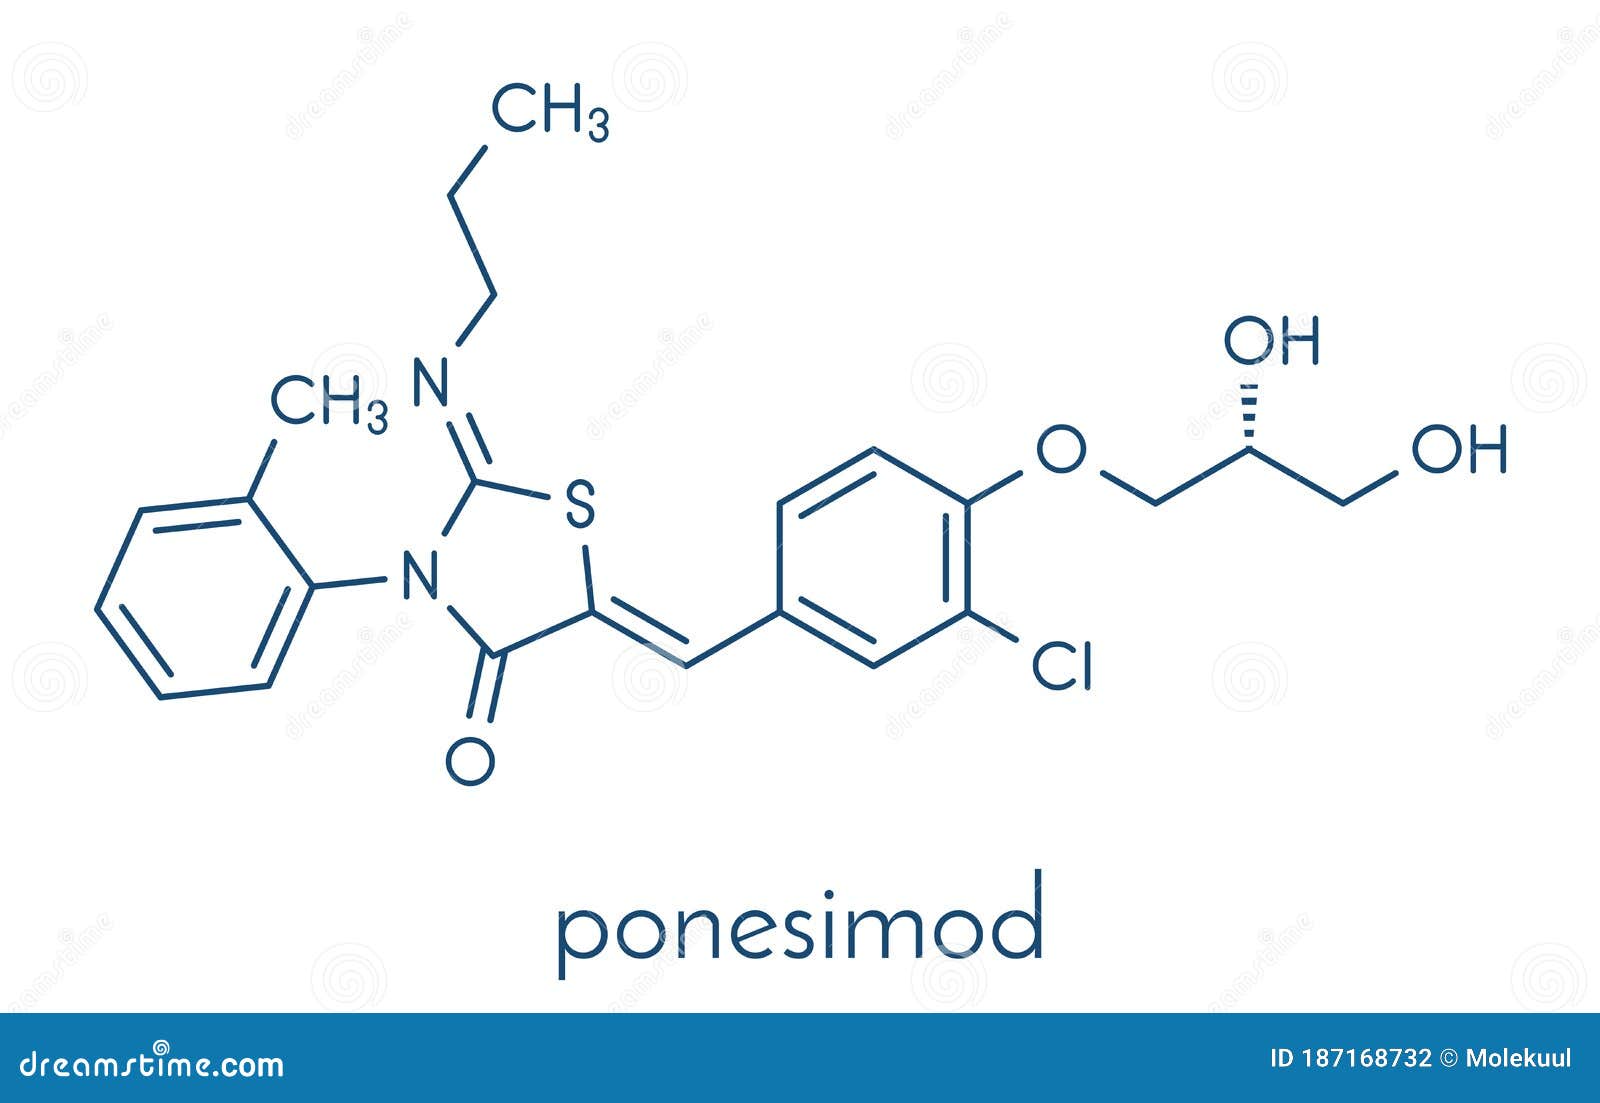 ponesimod anti-inflammatory drug molecule s1pr1 modulator. skeletal formula.